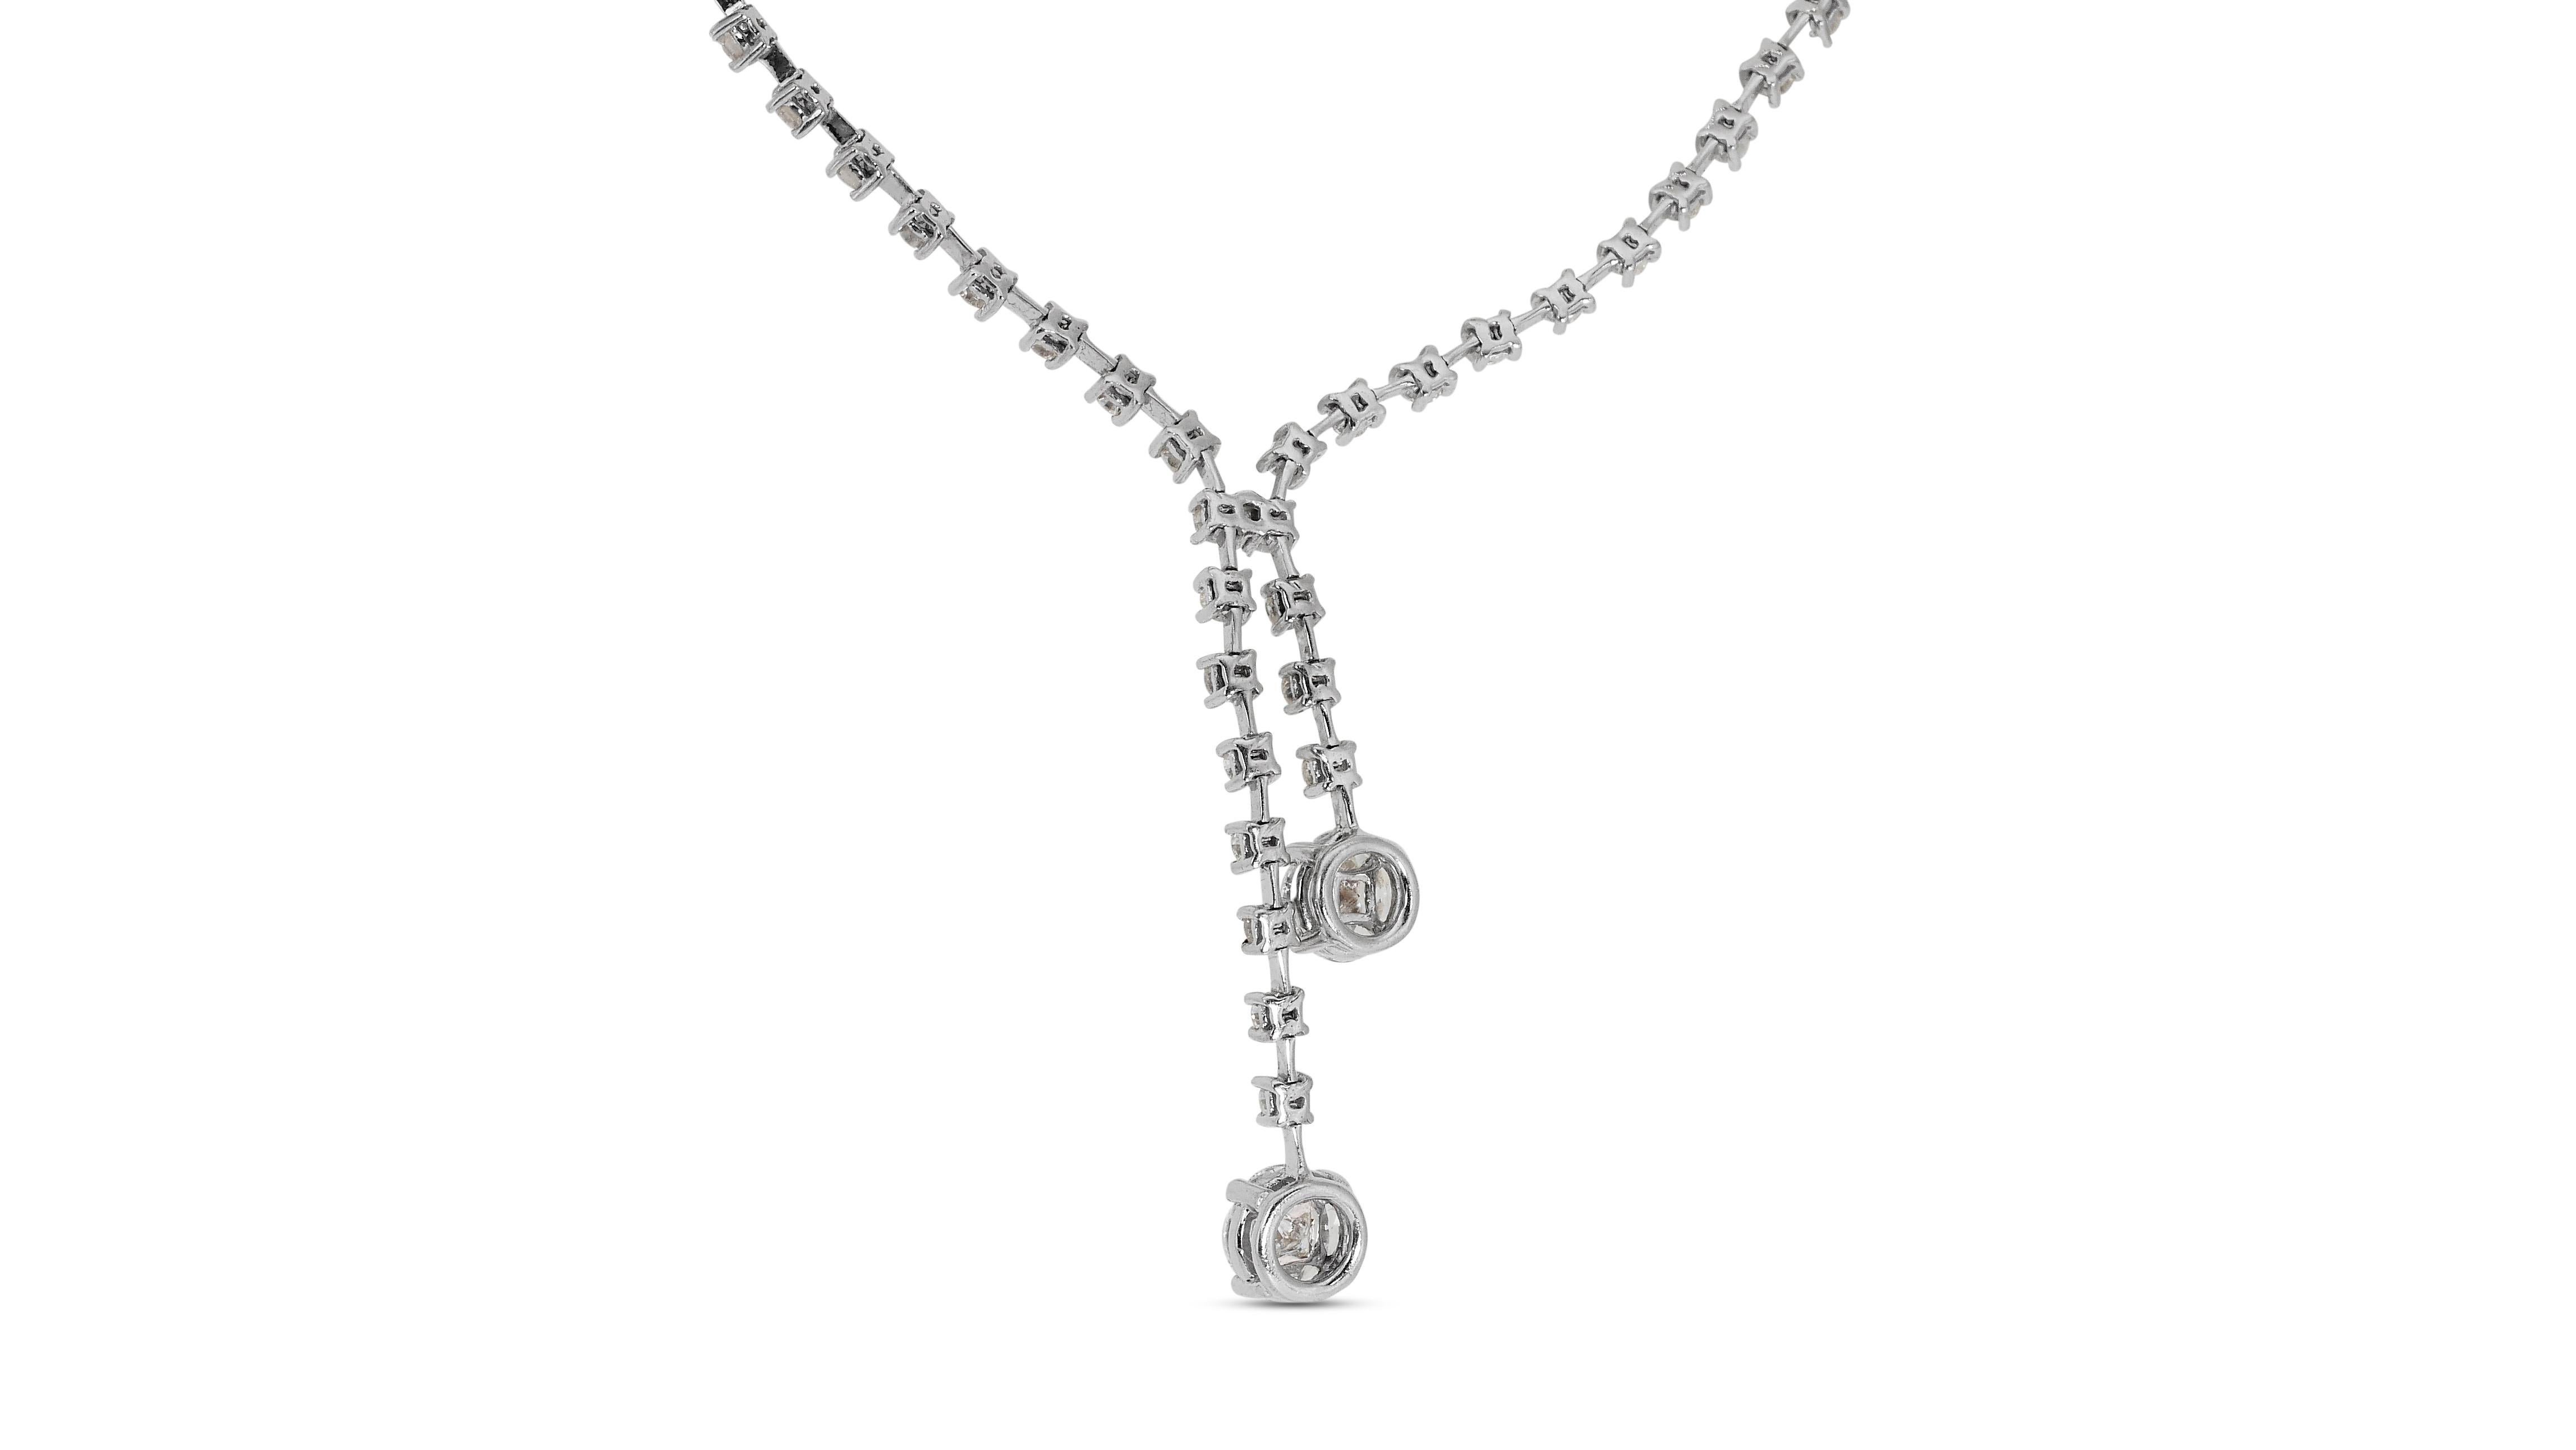 Glamorous 18k White Gold Drop Necklace w/ 5.06ct Natural Diamonds IGI Cert For Sale 3